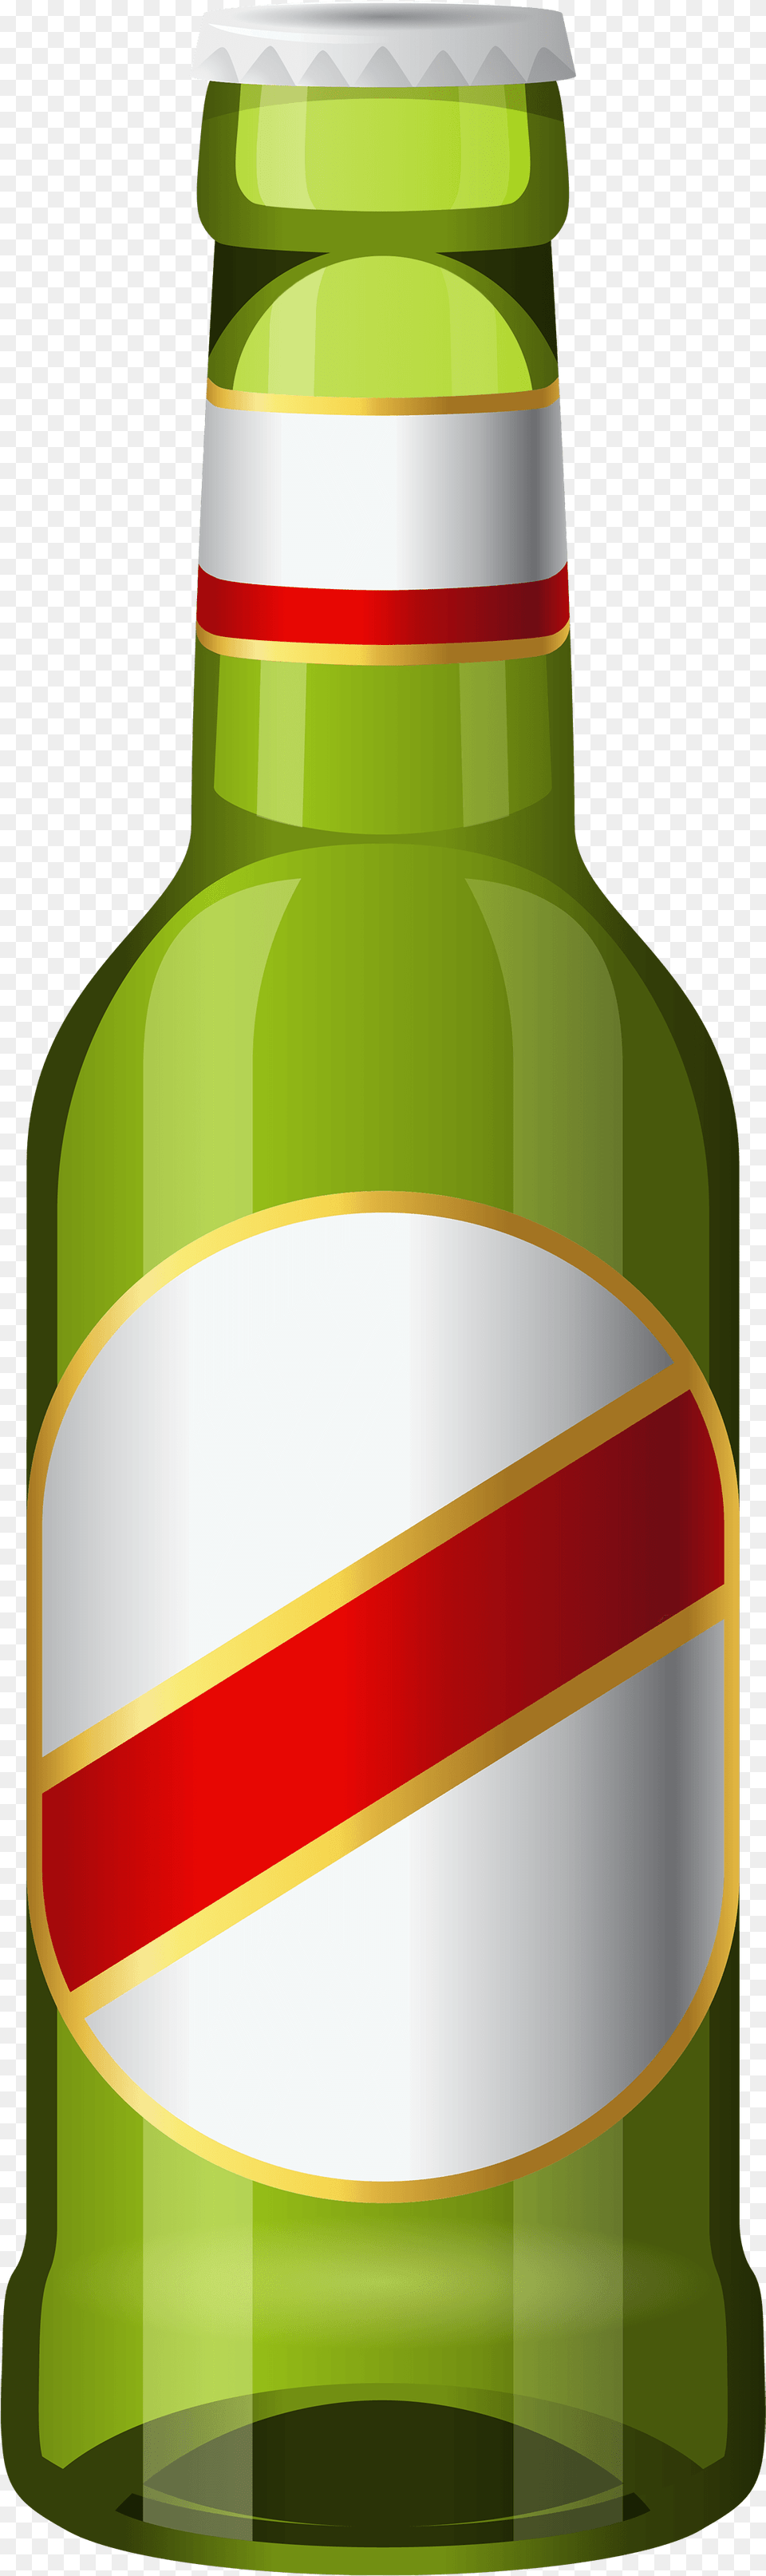 Cartoon Beer Bottle Clipart Clip Art Beer Bottle, Alcohol, Beer Bottle, Beverage, Liquor Free Png